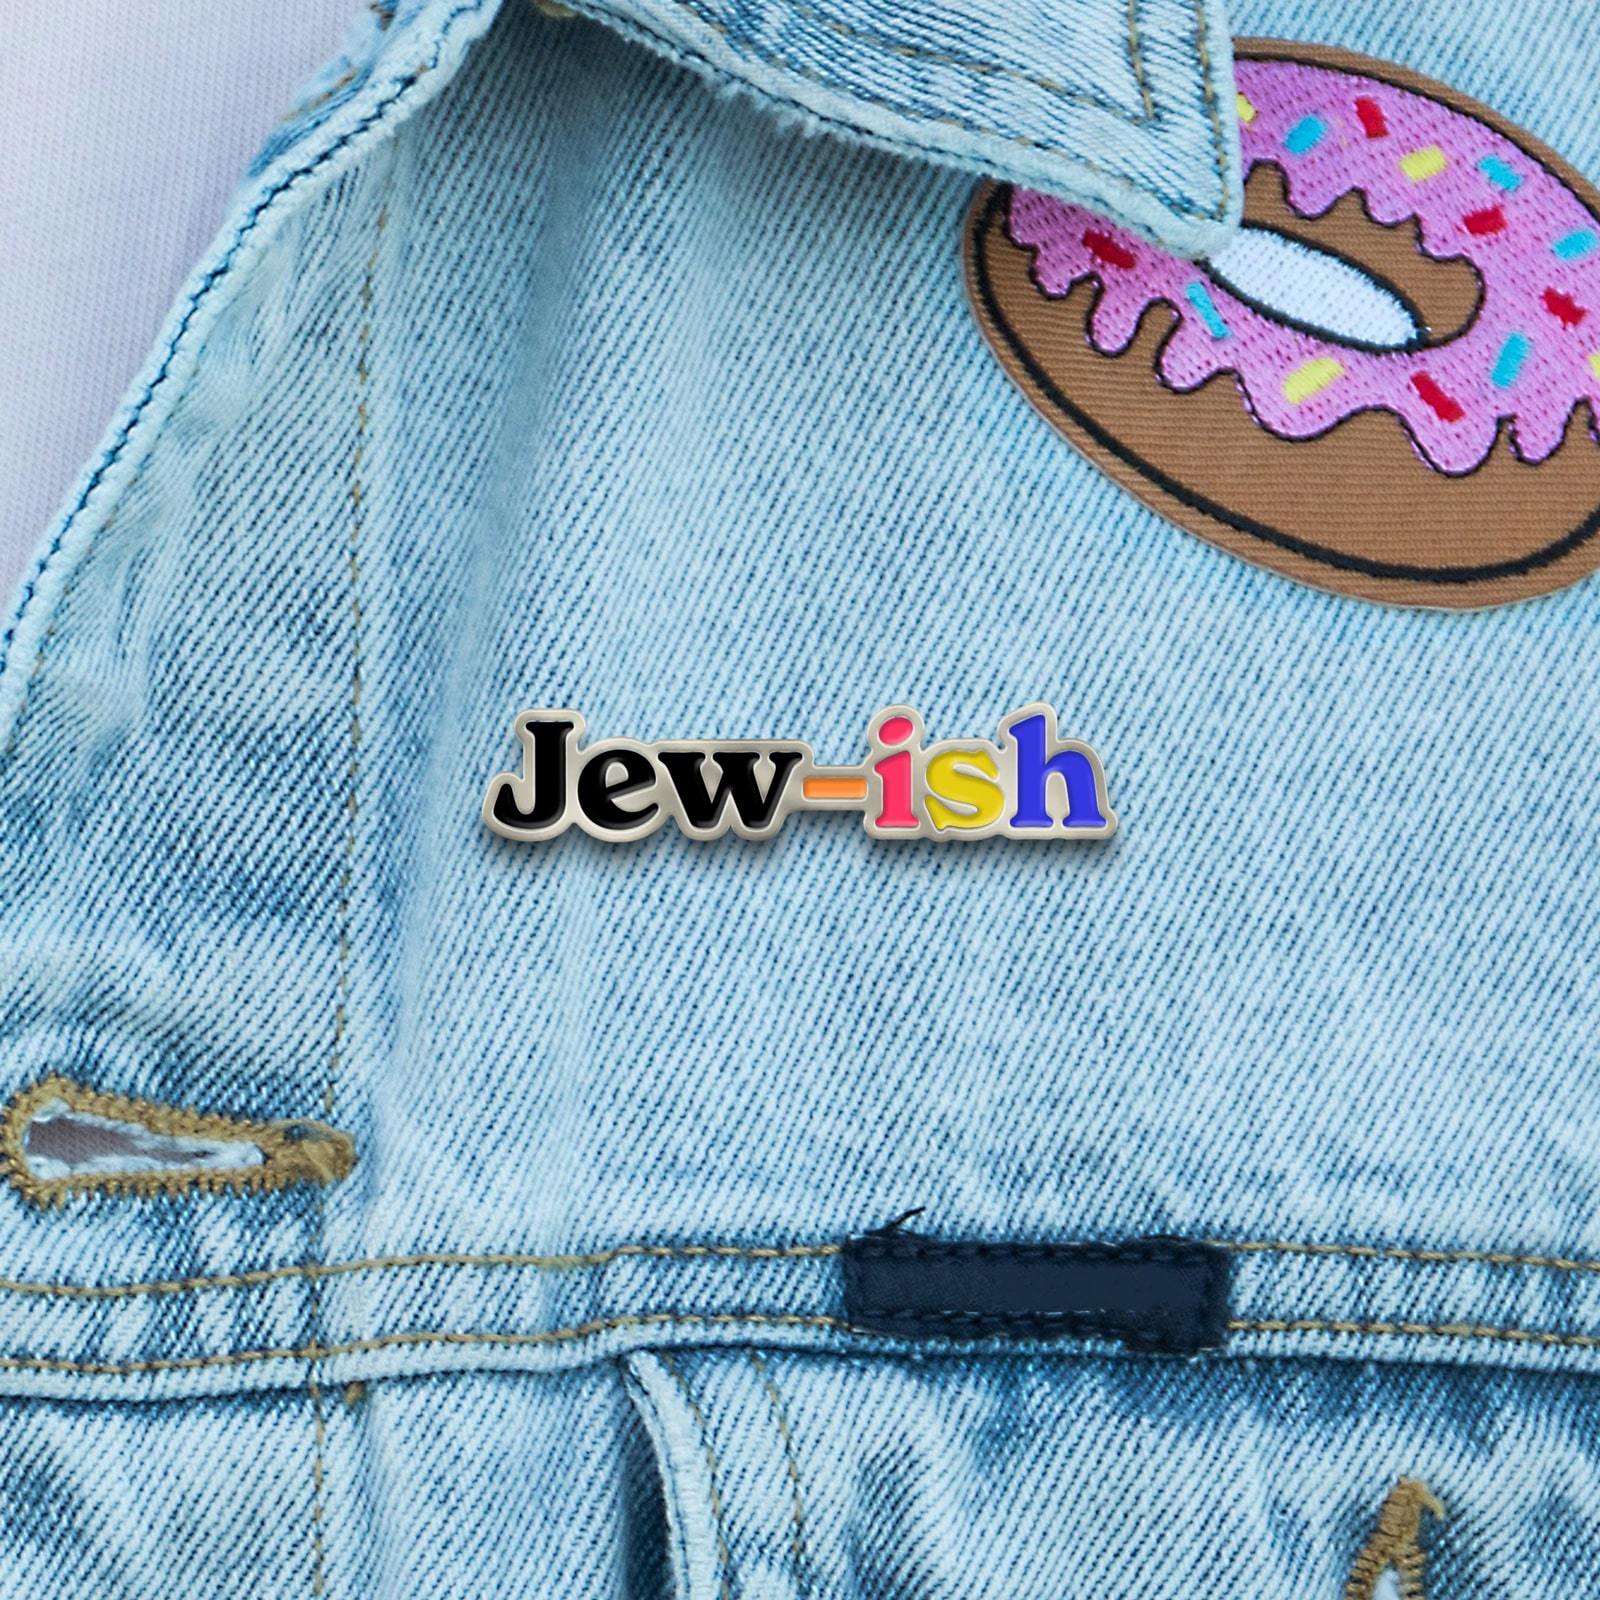 Jew-ish Enamel Pin on denim jacket